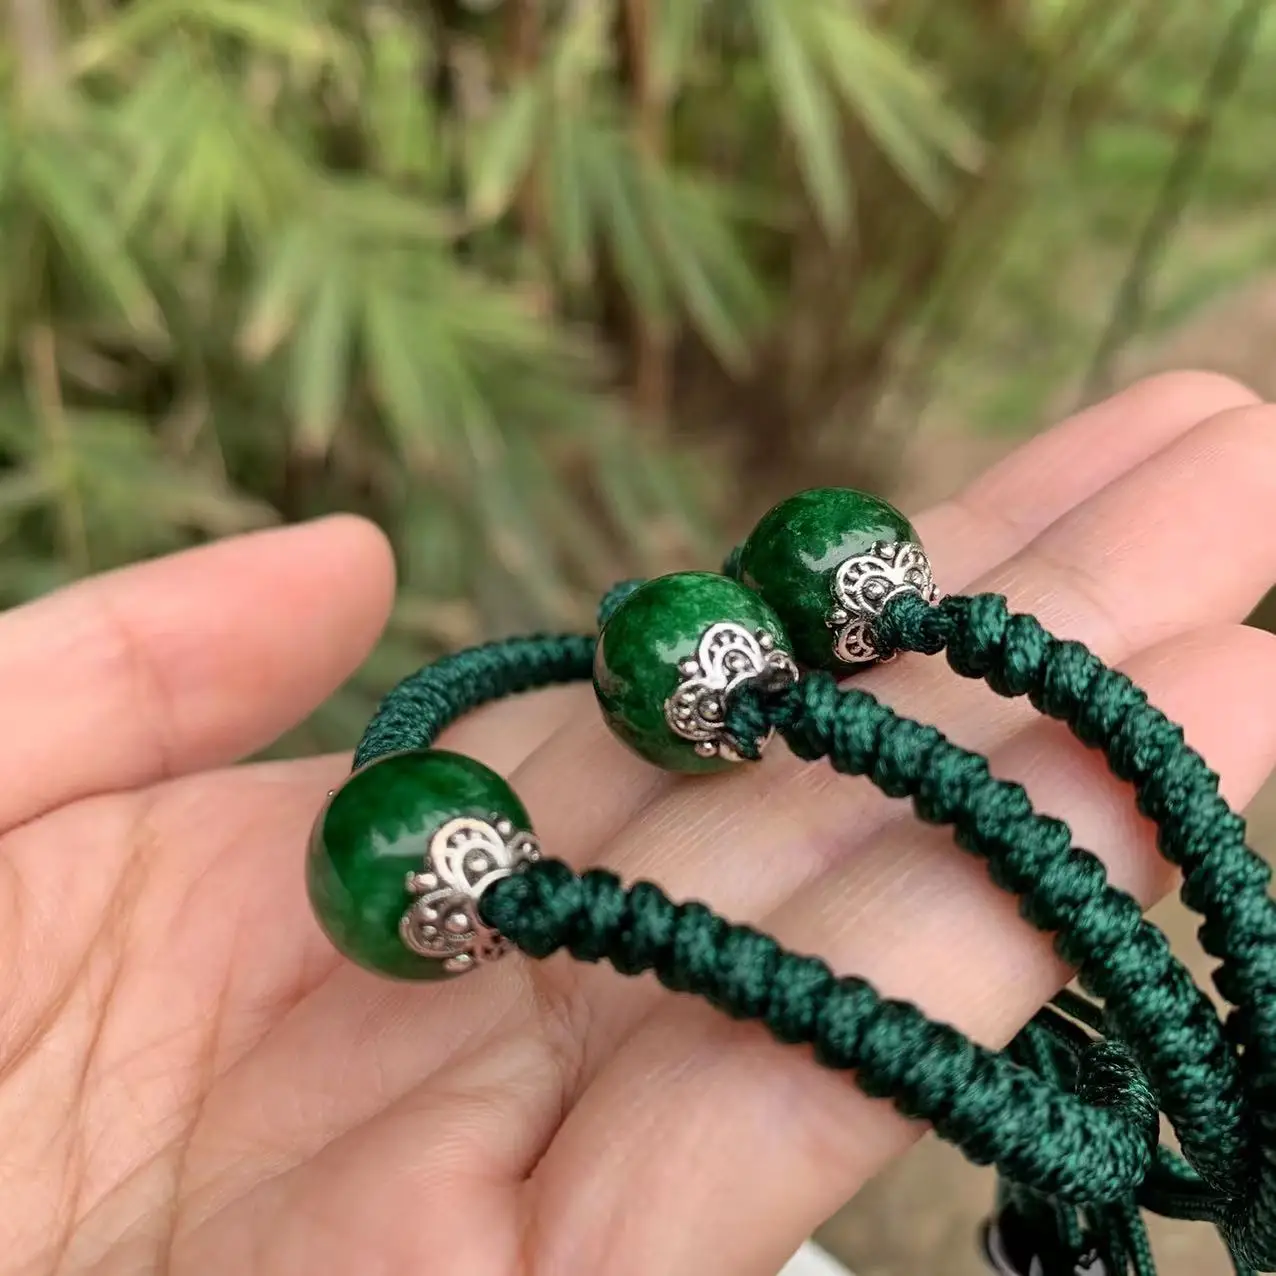 Irregular Natural Amethyst Bracelet Beads Jewelry Wholesale GEM Beads  Healing Women Men Jewelry Gifts